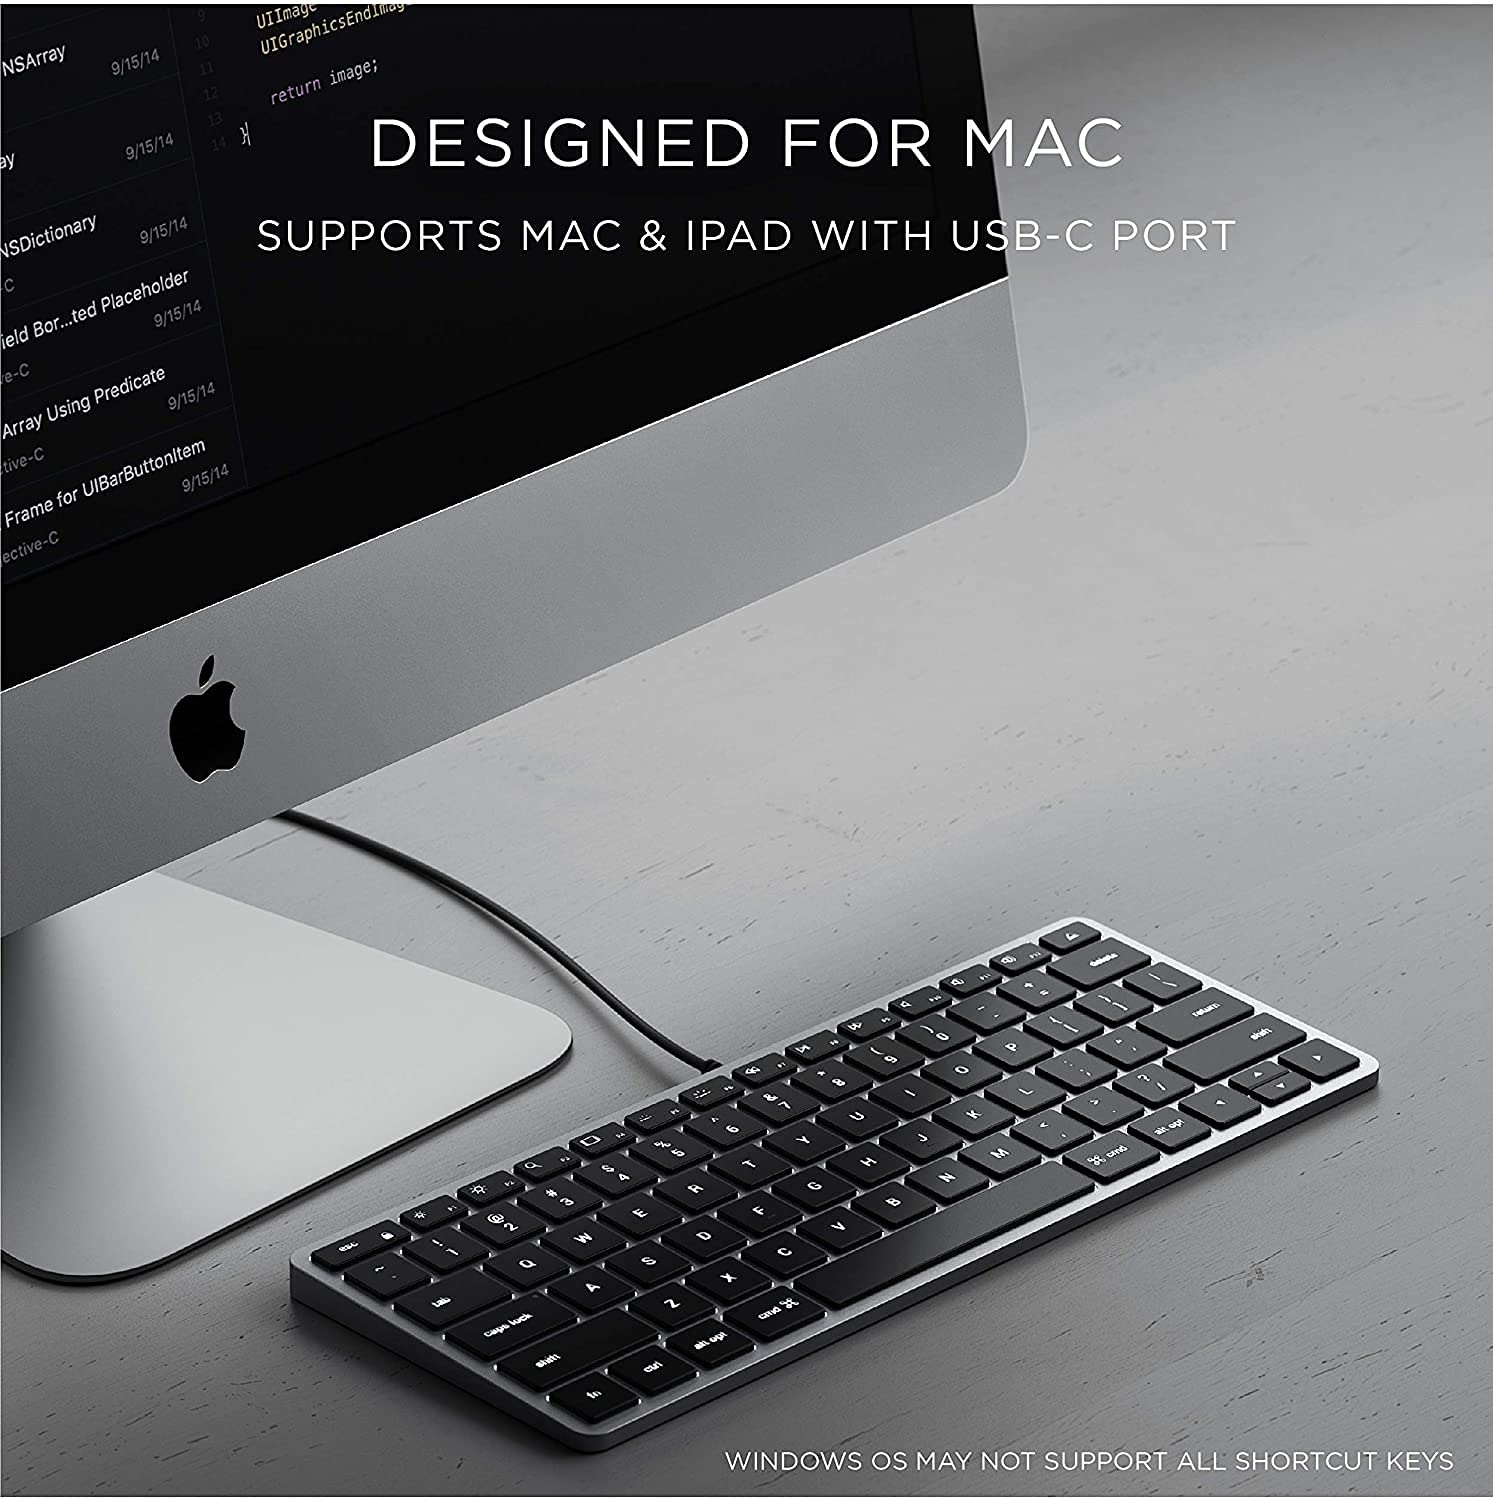 macbook air illuminated keyboard